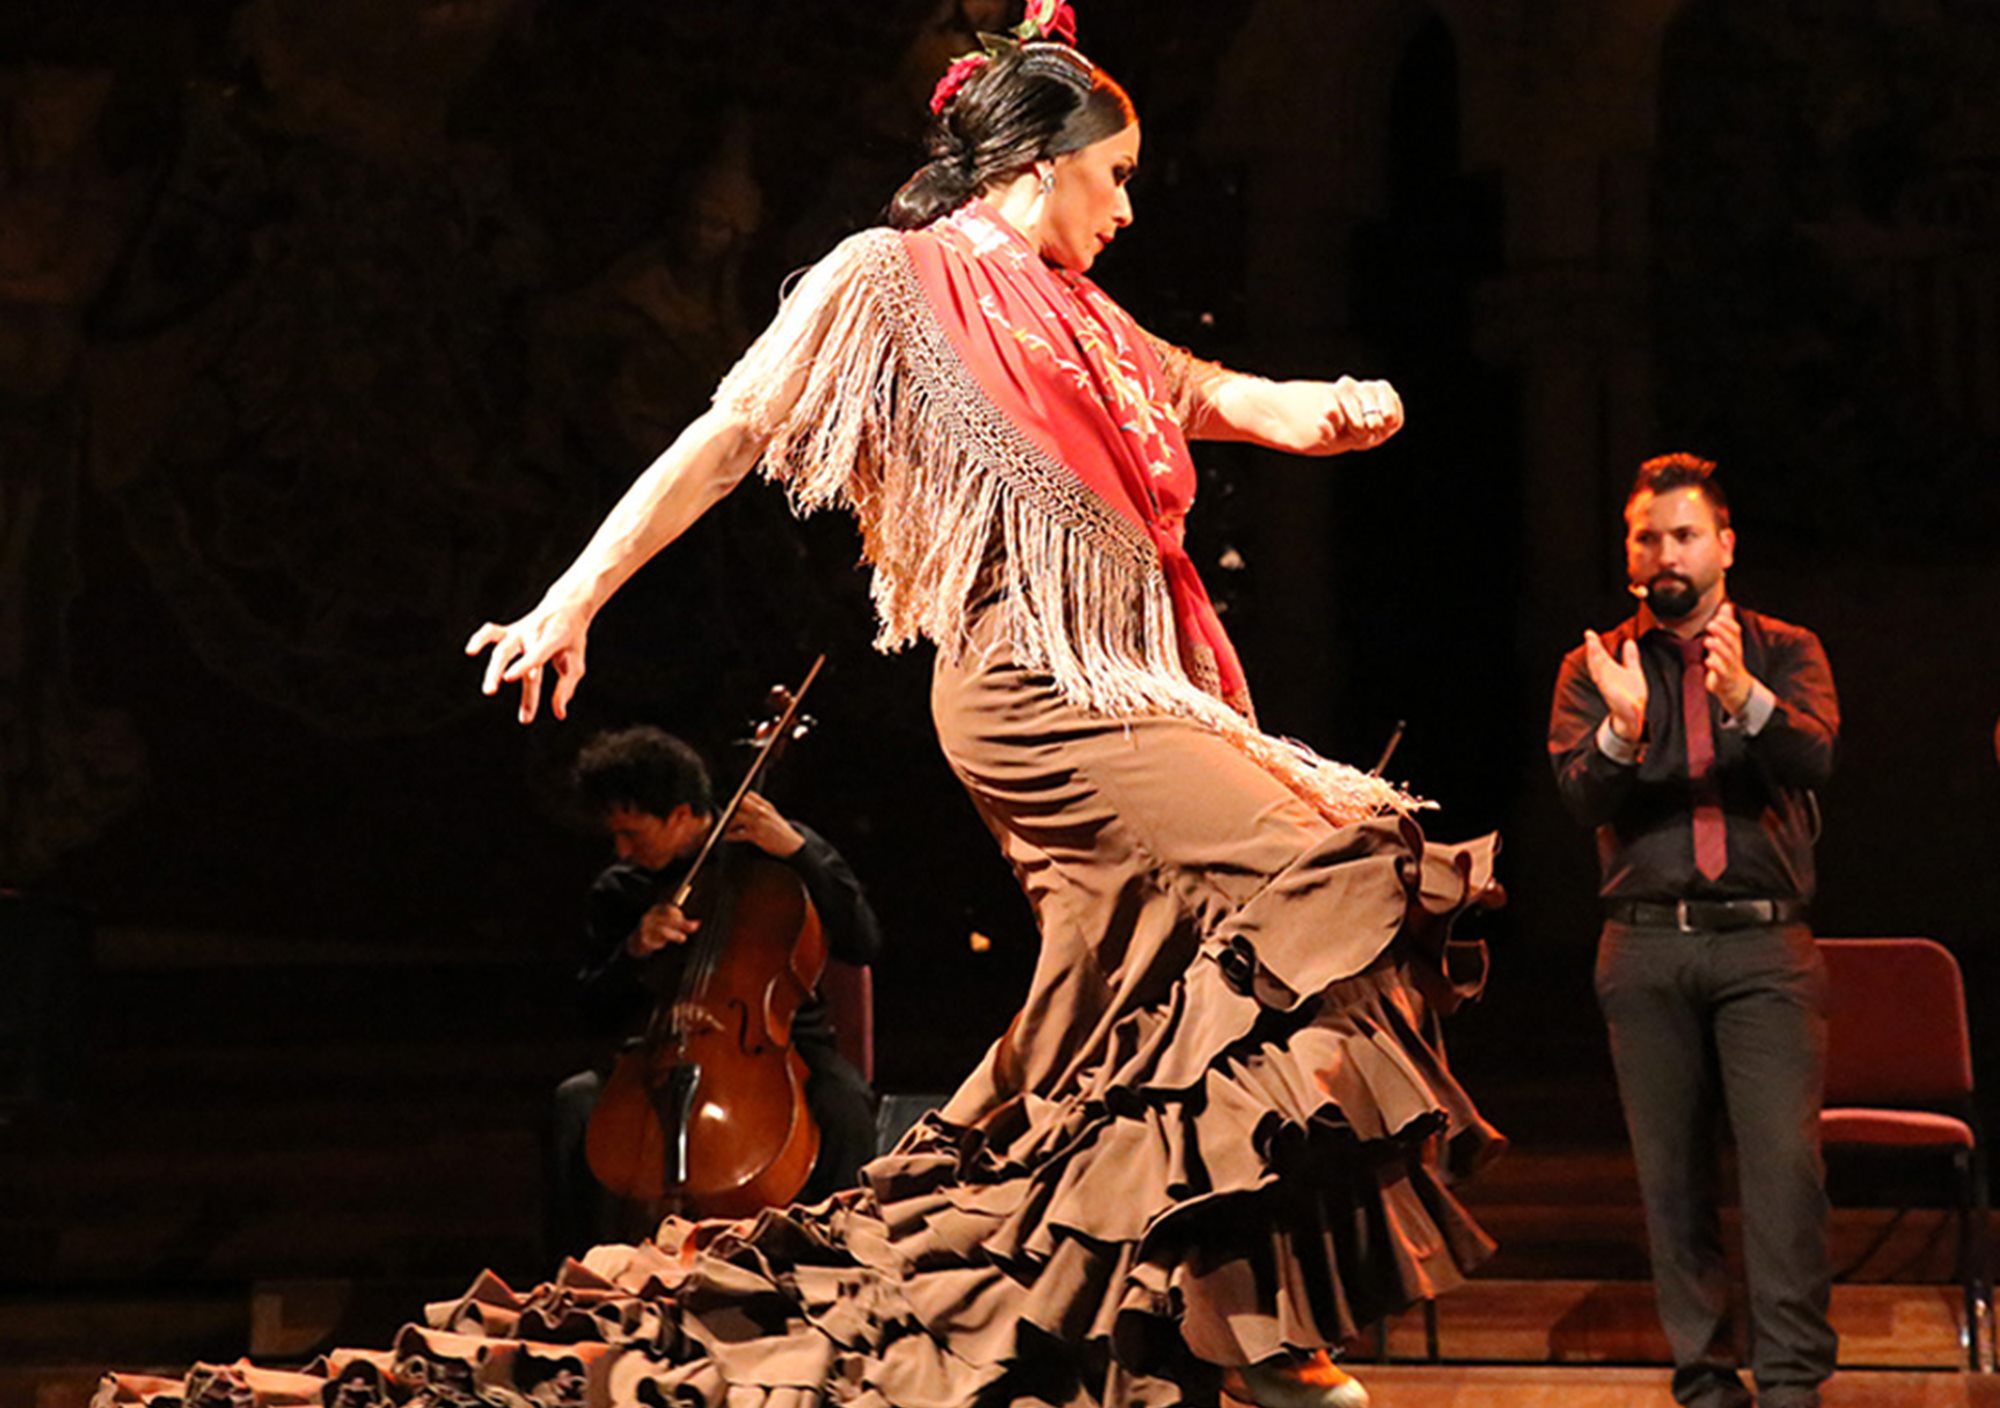 Opéra et Flamenco dans le Teatre Poliorama barcelone billets reservation acheter réserver en ligne online